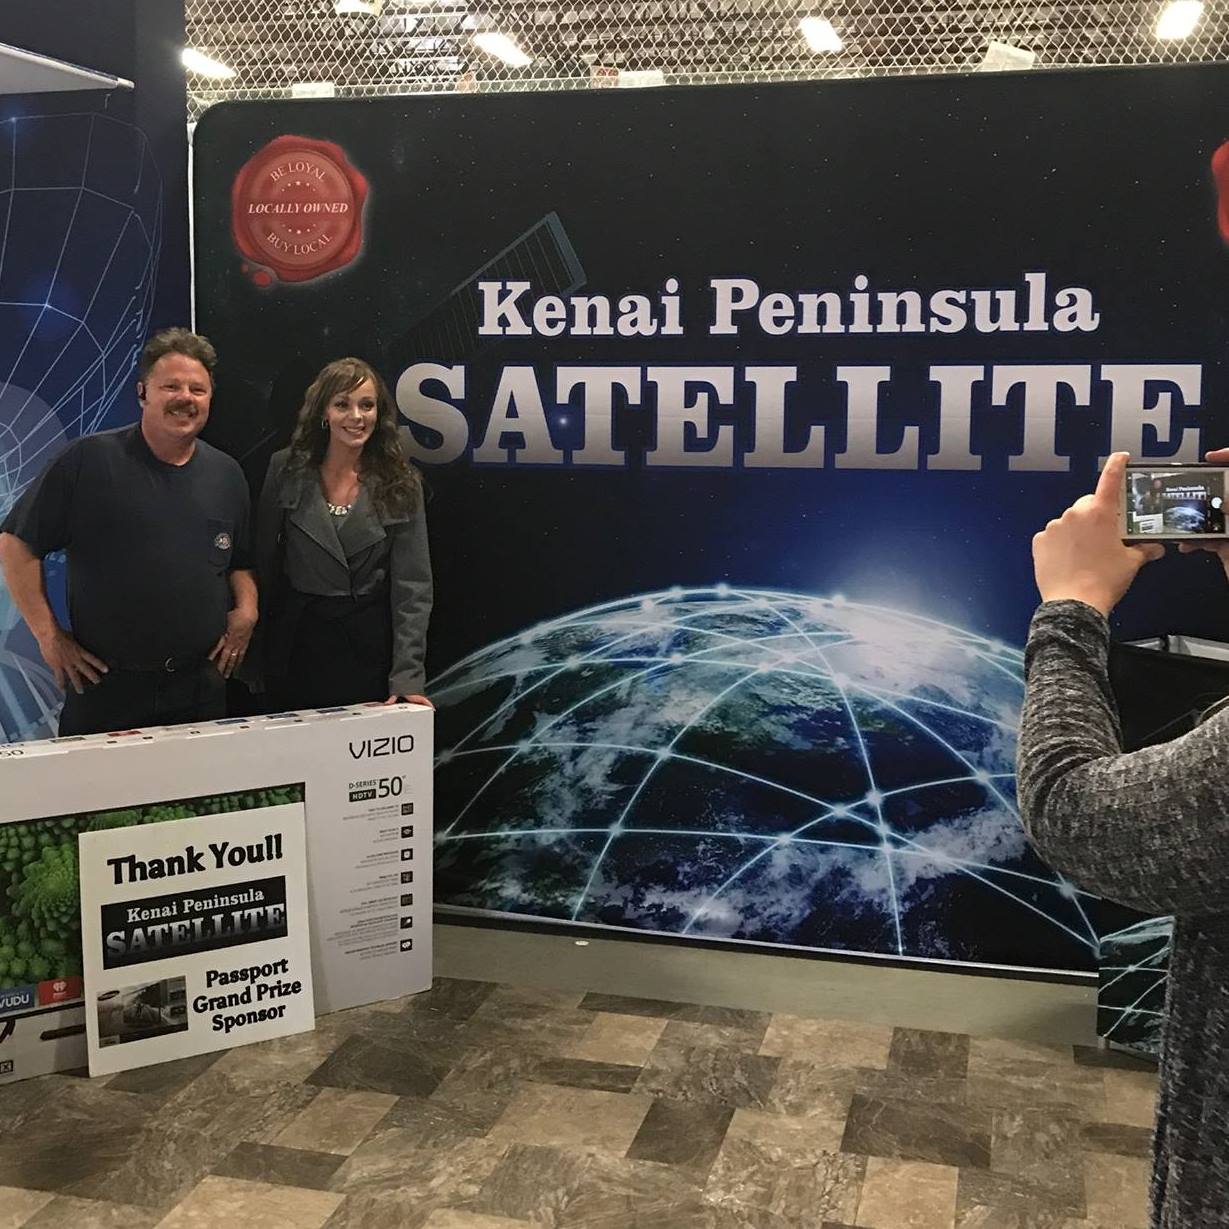 Kenai Peninsula Satellite